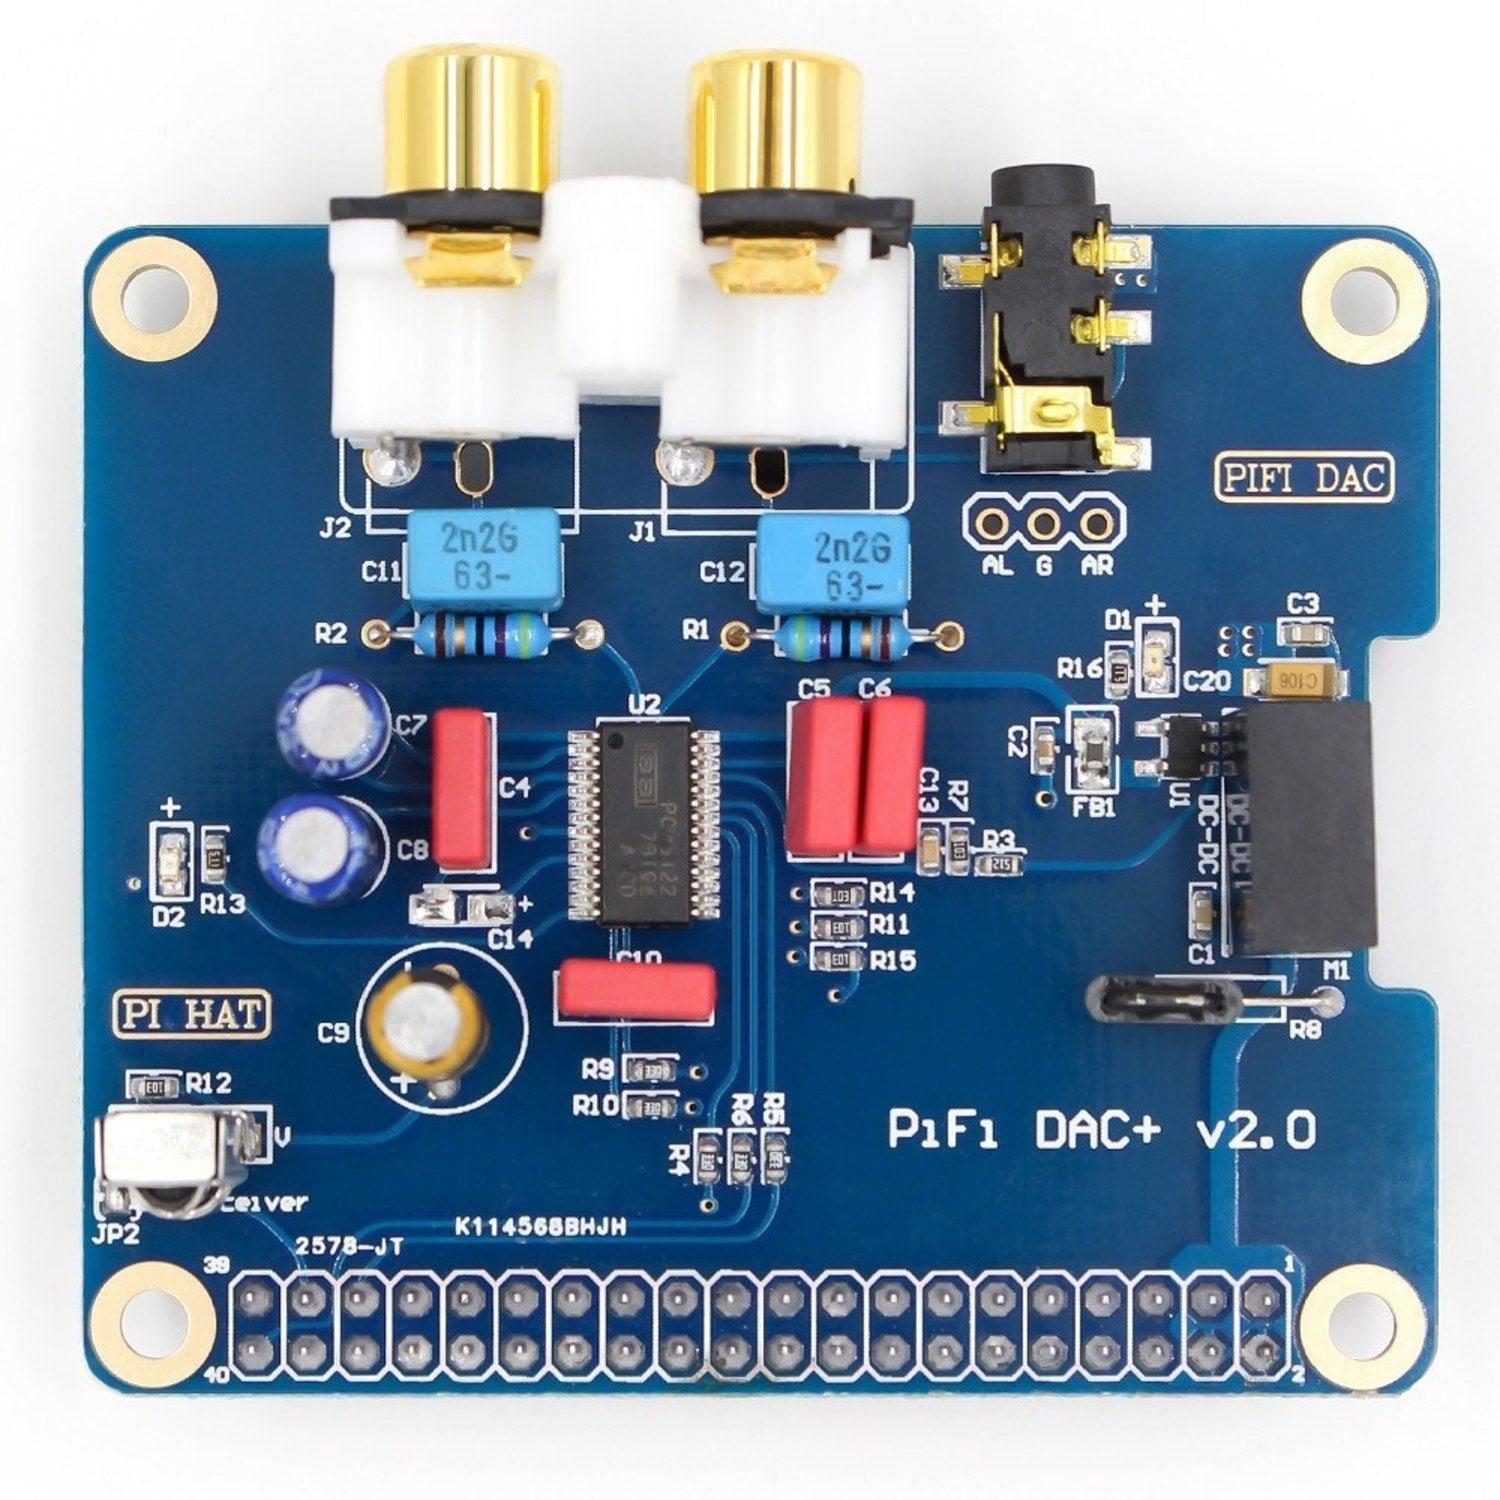 HIFI DAC Audio Sound Card Module I2S interface for Raspberry Pi